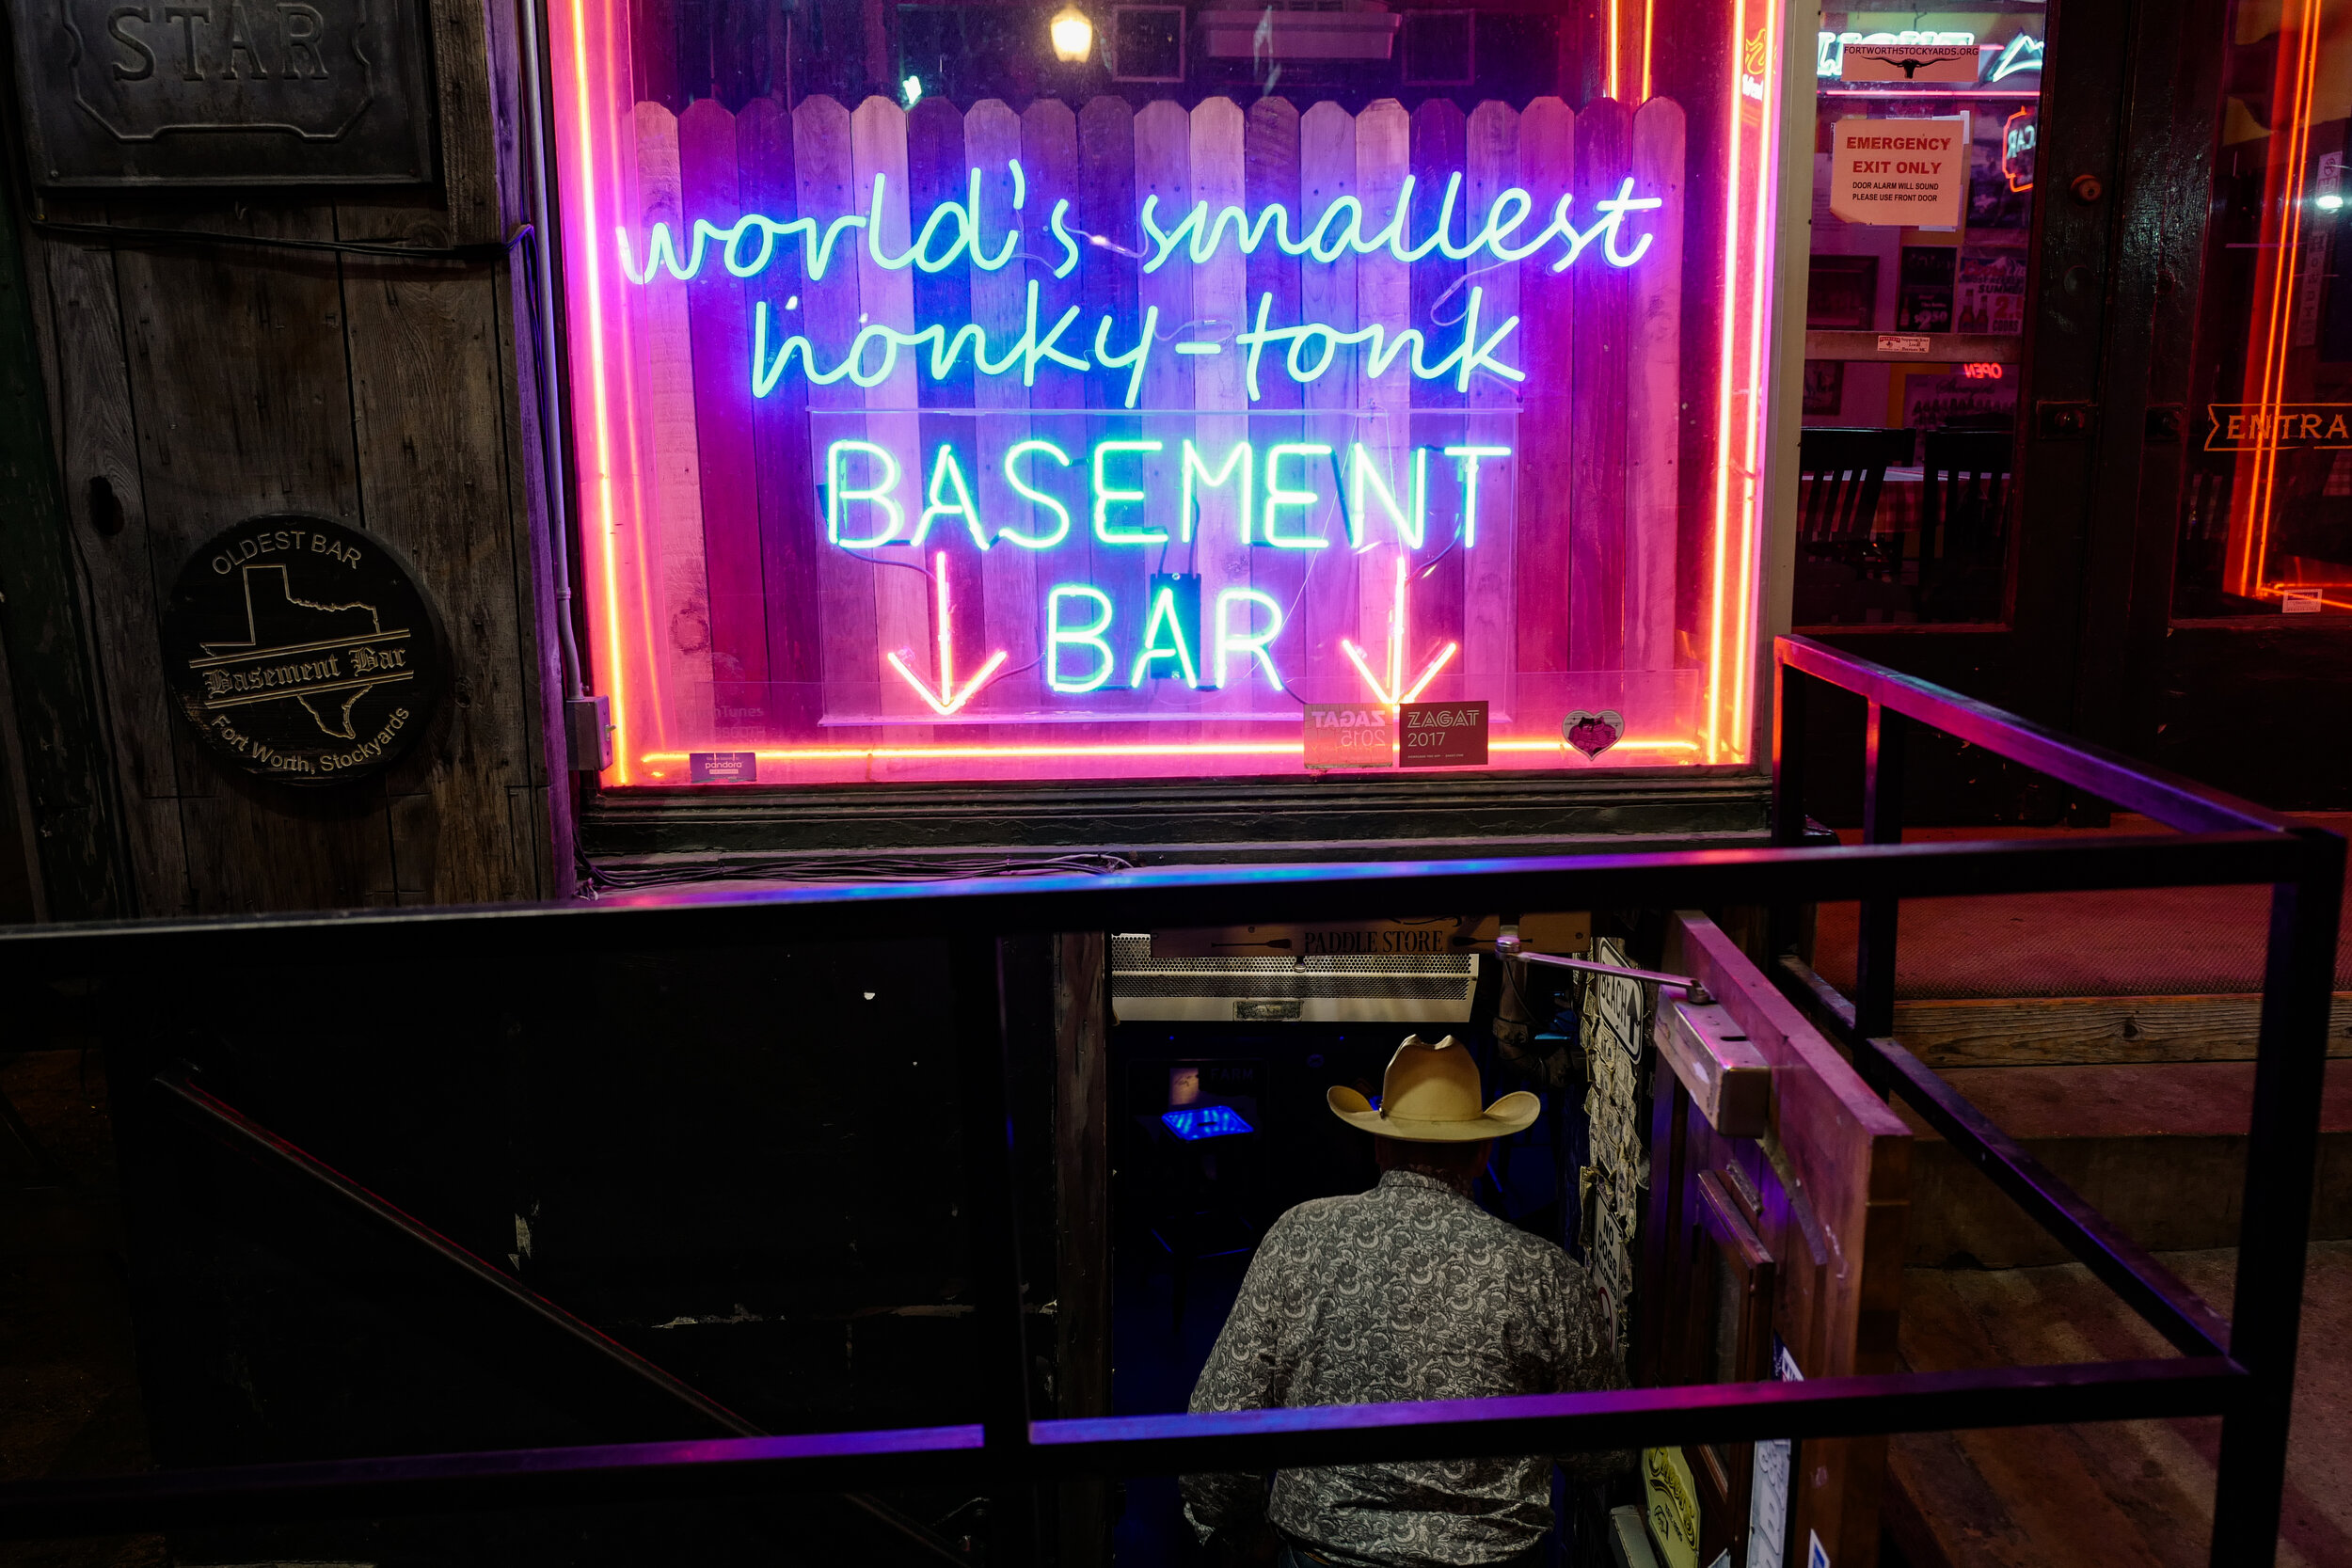  Basement Bar, Fort Worth, TX. 